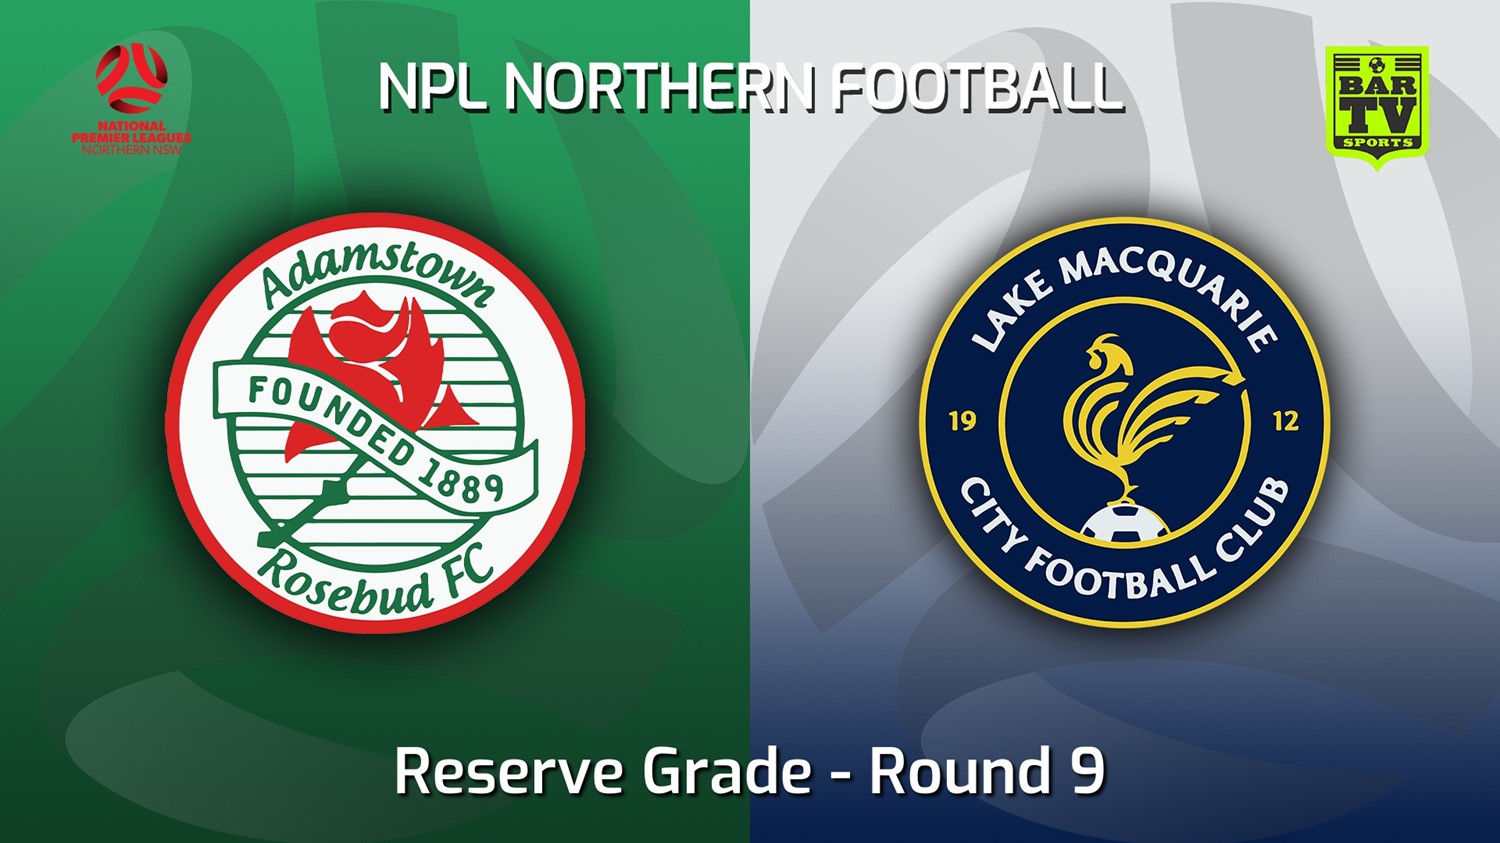 220507-NNSW NPLM Res Round 9 - Adamstown Rosebud FC Res v Lake Macquarie City FC Res Minigame Slate Image